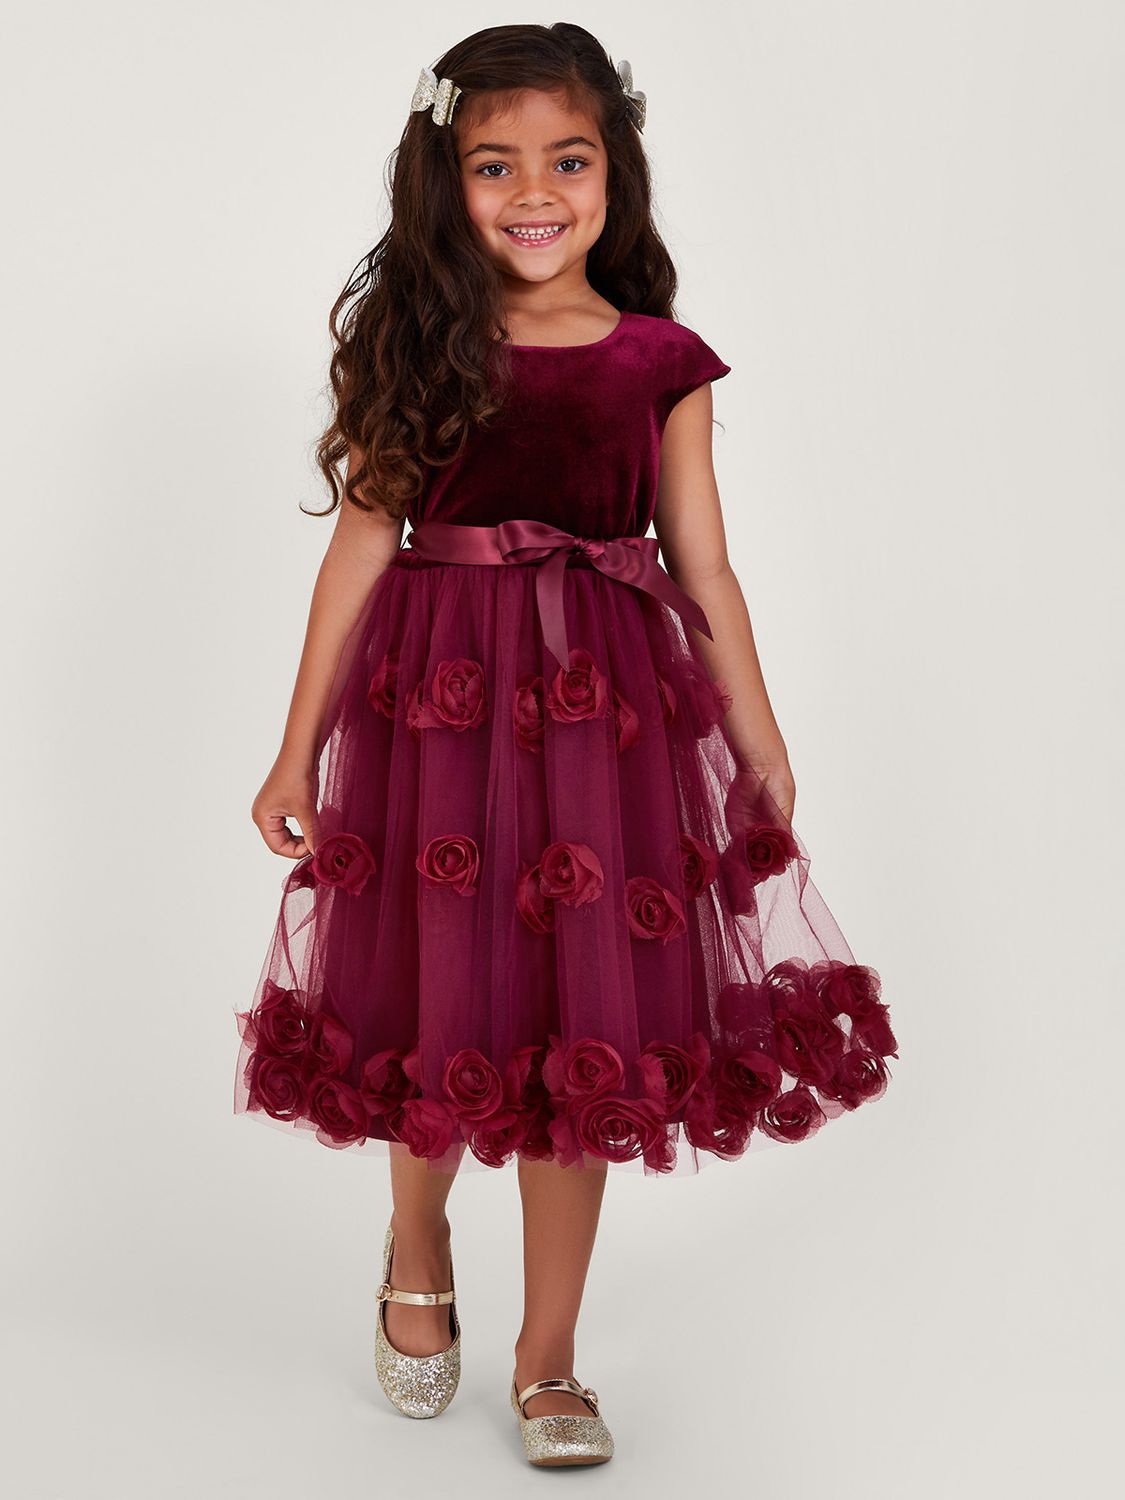 Monsoon Kids' Ottilie 3D Rose Dress, Burgundy, 3 years